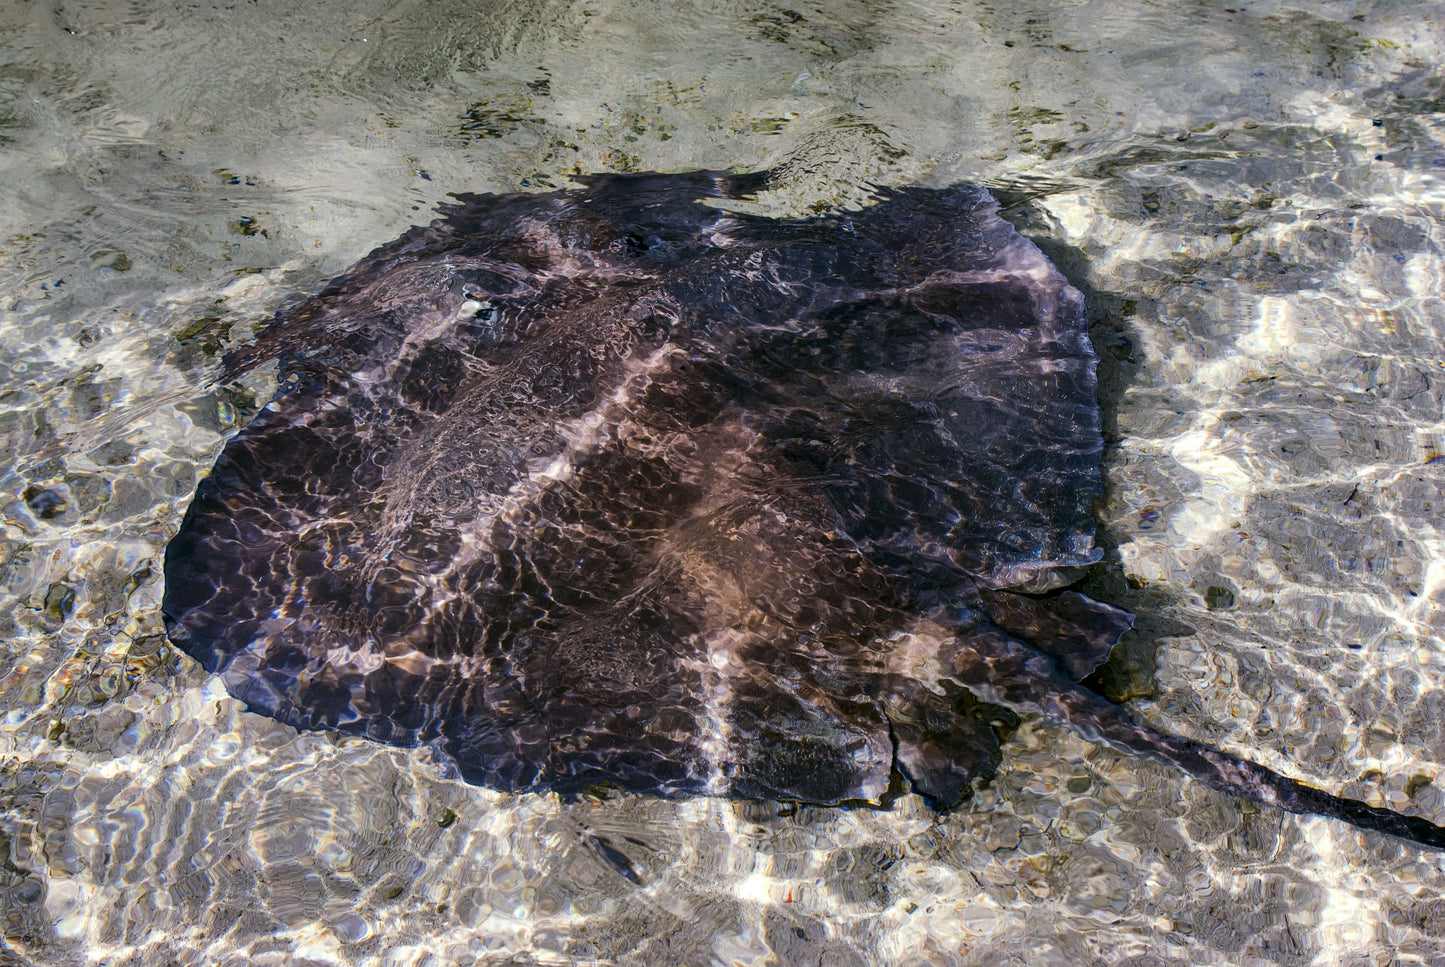 Alessandra Mattanza | EXPLORER, Australia. A large ray patrols the shallows of an Australian beach. Available as an art print or as a photographic print on acrylic glass.